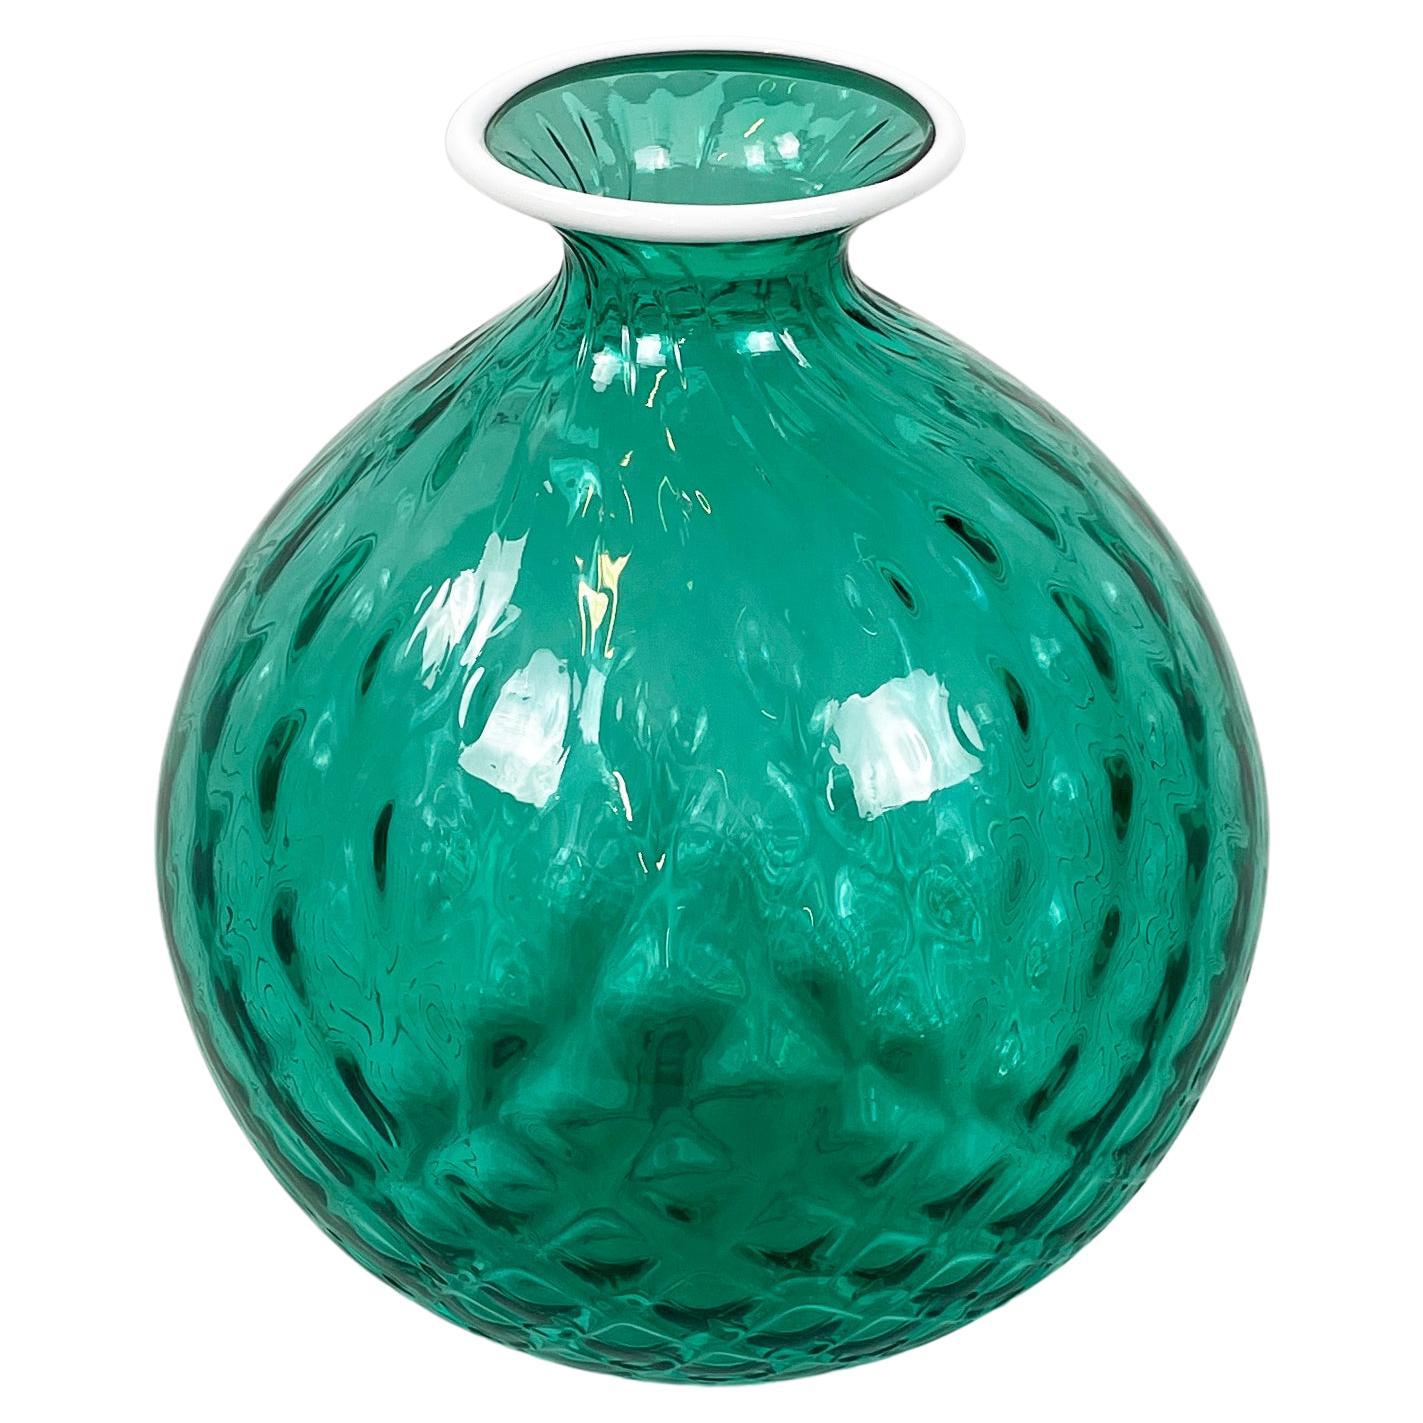 Italian modern round vase in green and white Murano glass by Venini 1990s